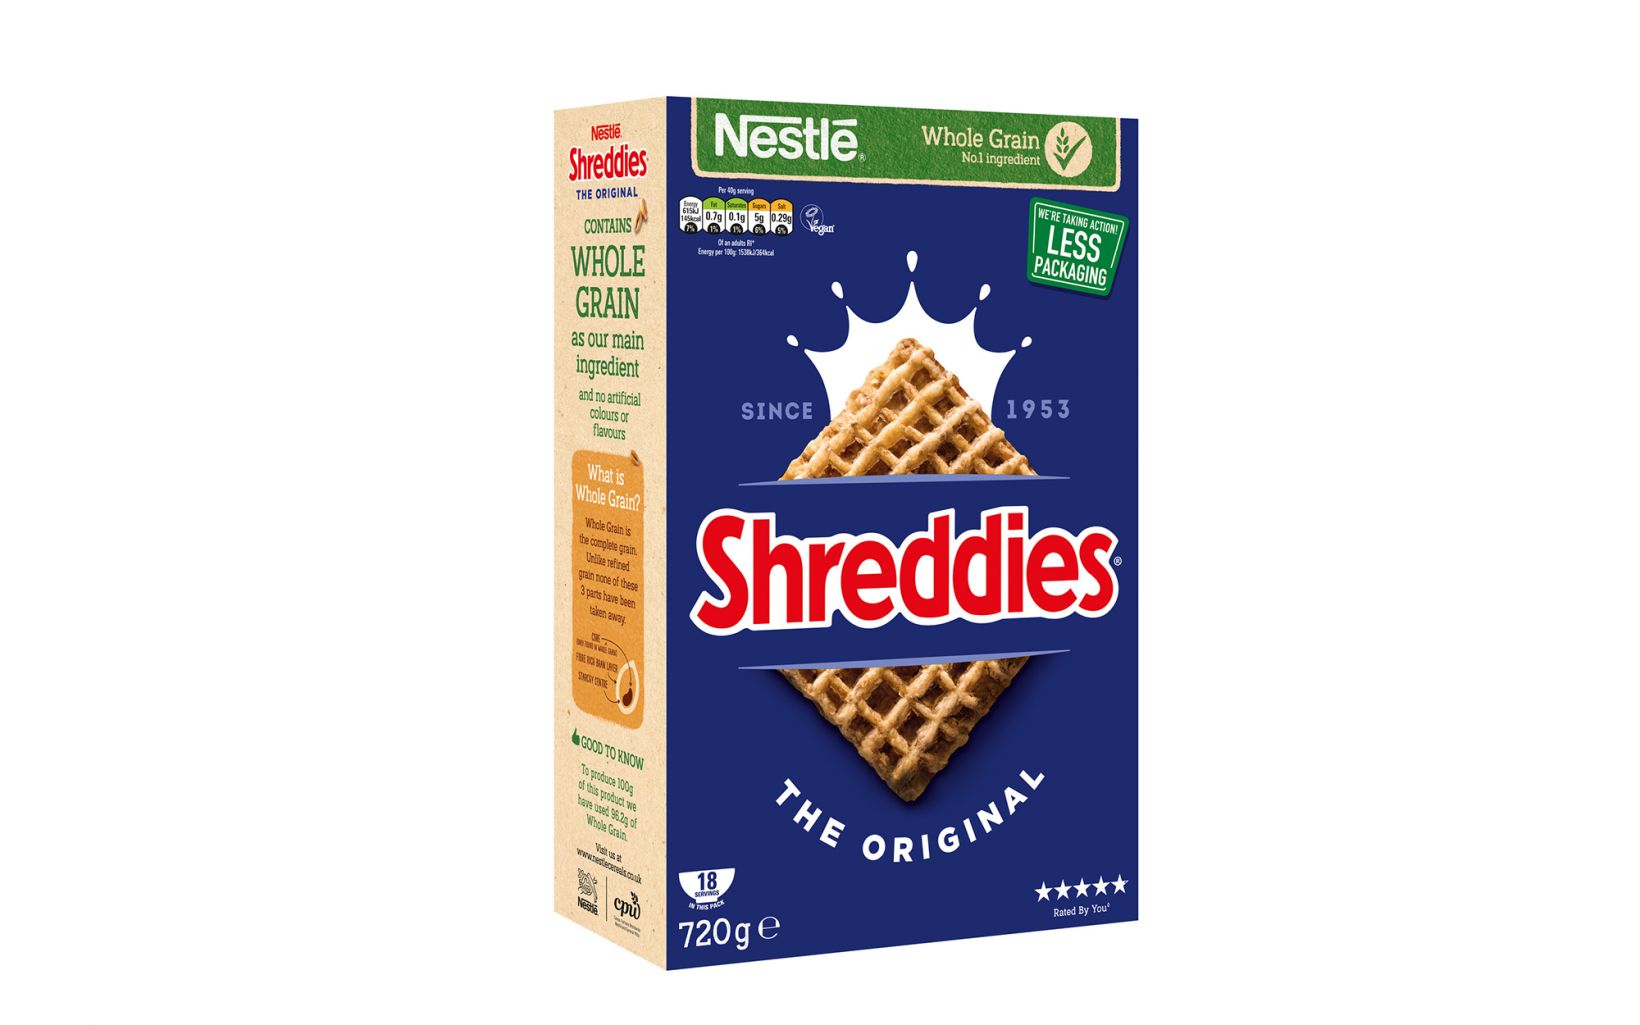 19444 Shreddies 720g Perfect Box 44085590 3d Repurpose Id99396 Edit